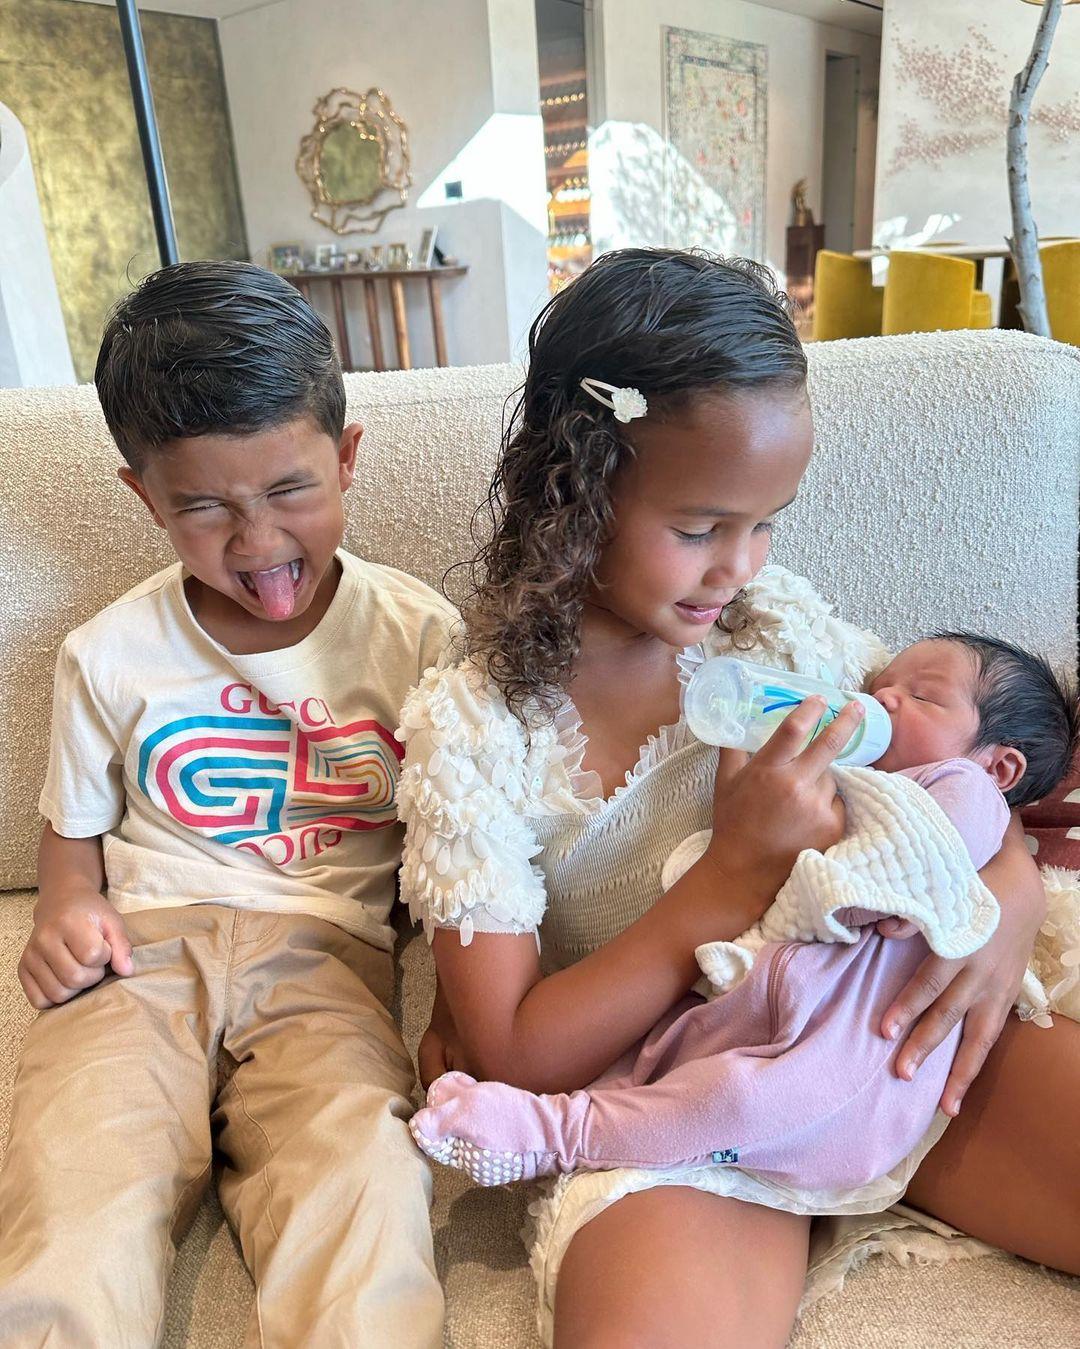 Chrissy Teigen & John Legend's children Luna and Miles with baby Wren Alexander